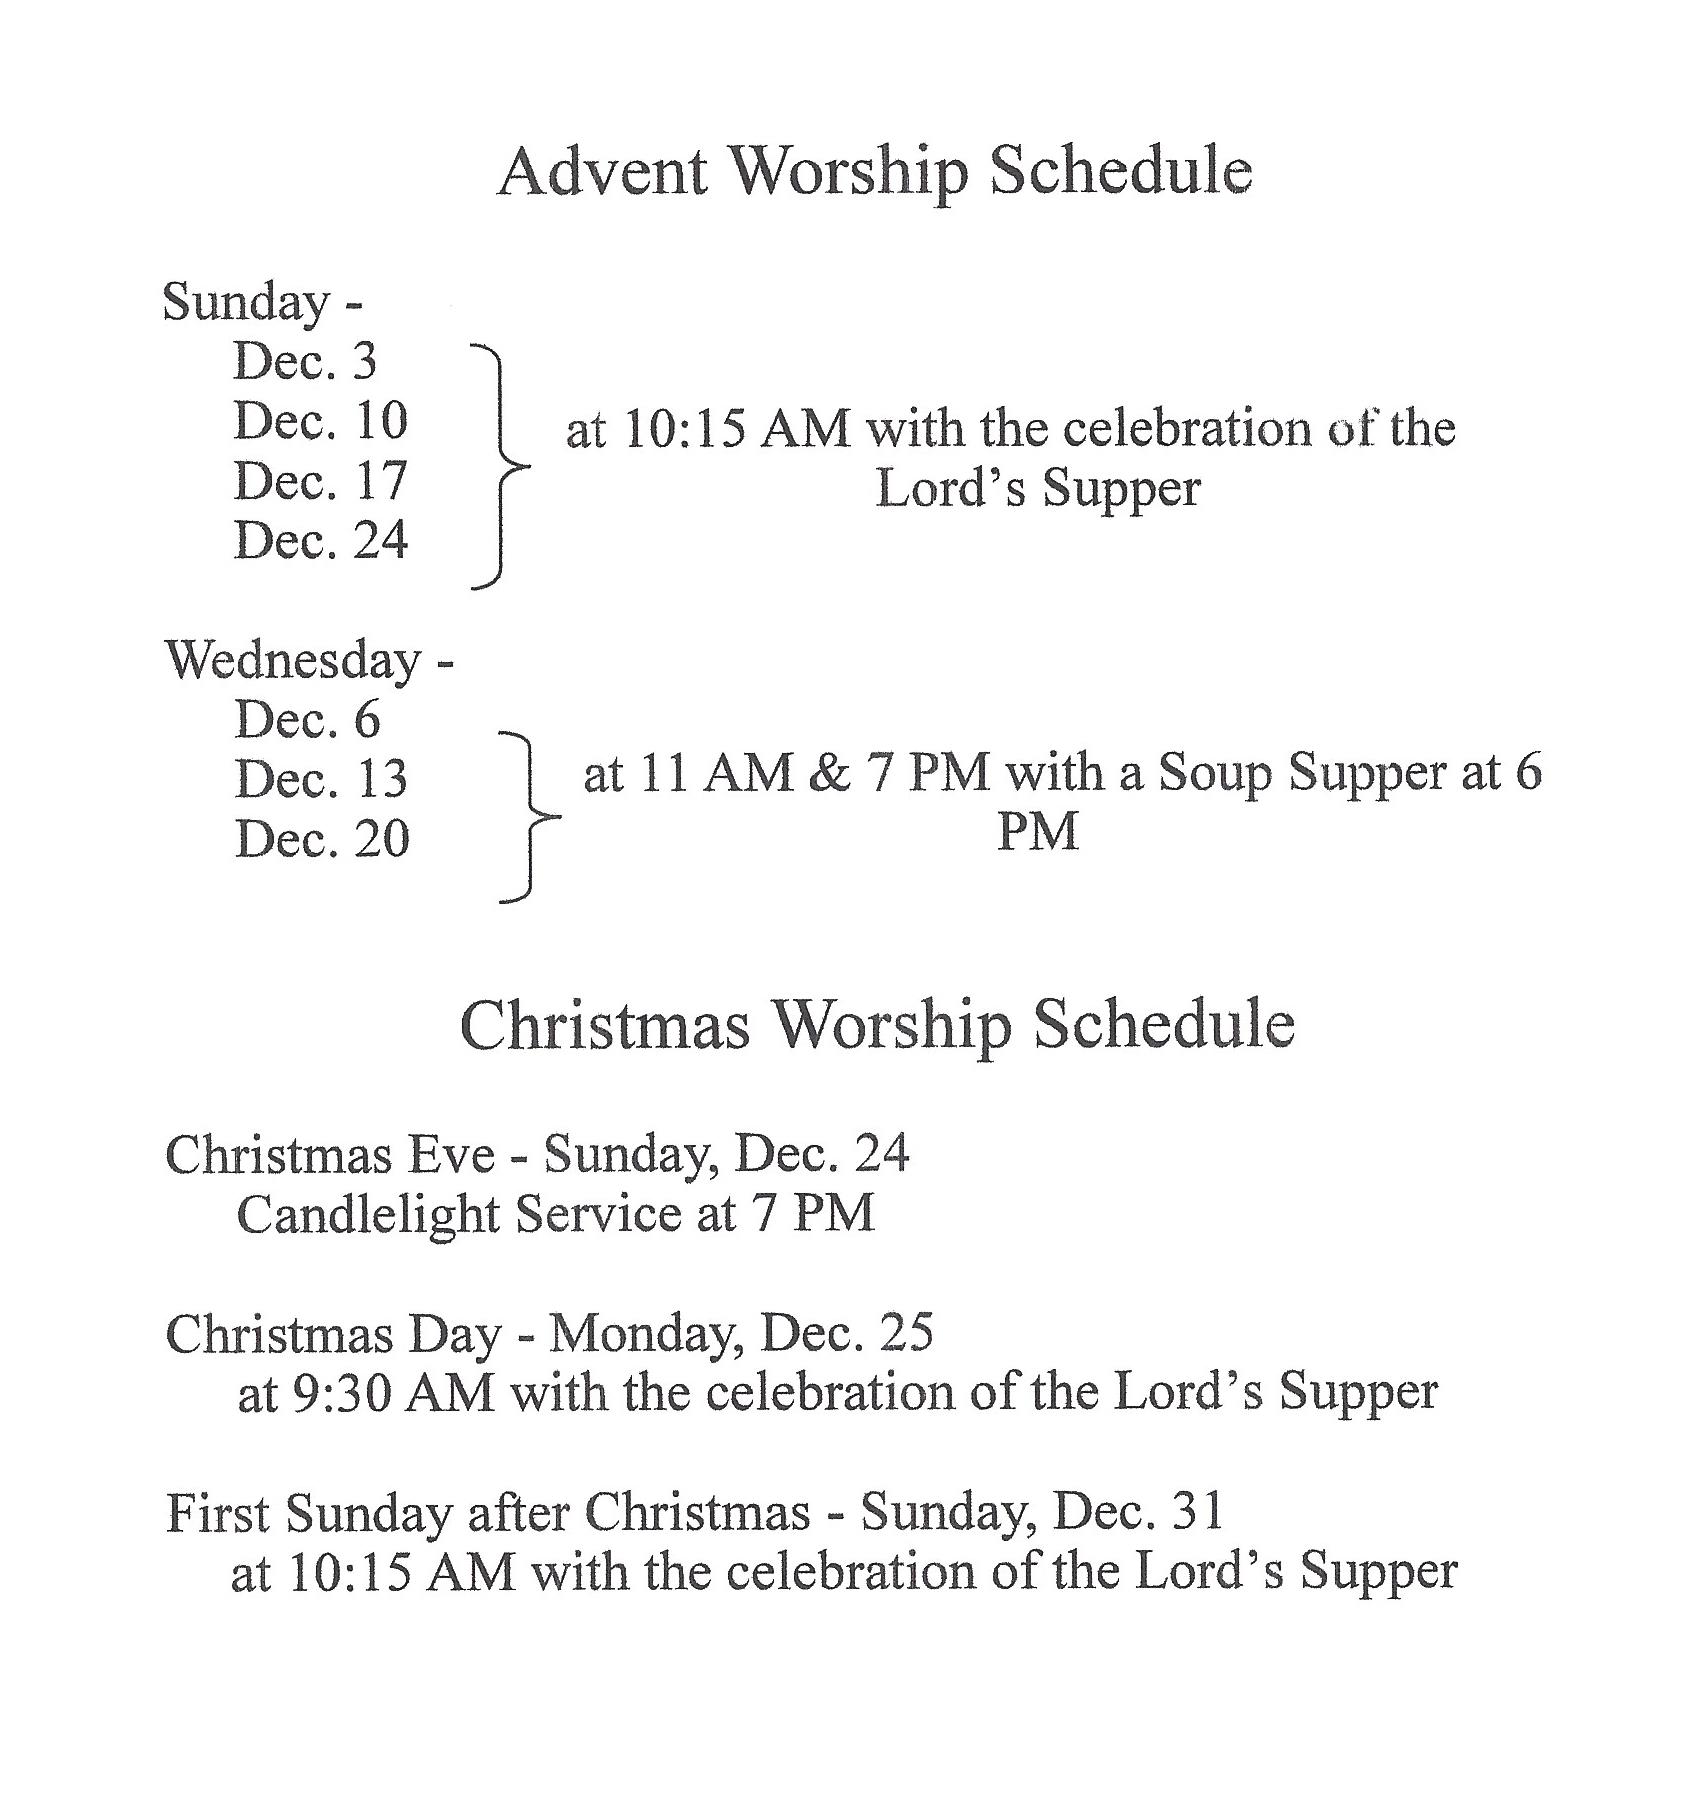 image-974455-Advent-Christmas_Worship_Schedule_(22)-aab32.jpg